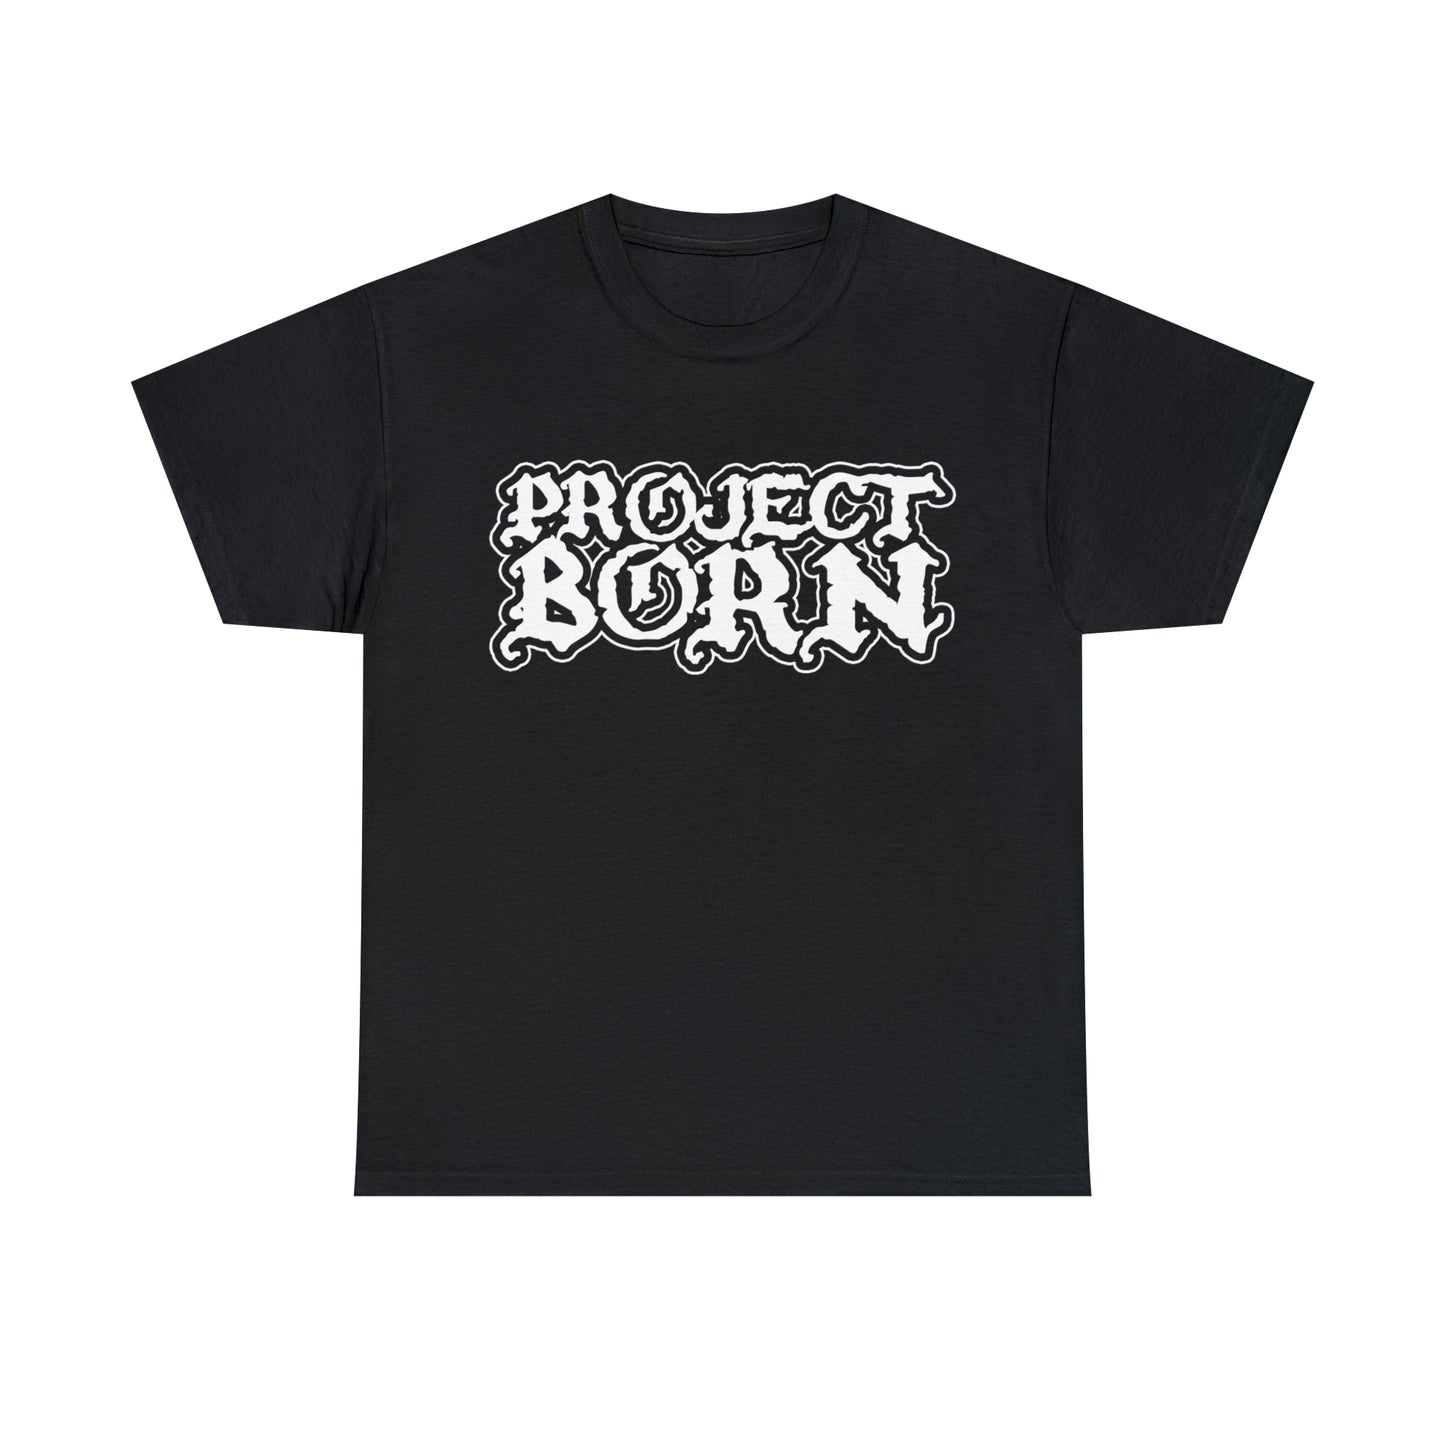 Project Born "Whiteout" T-Shirt